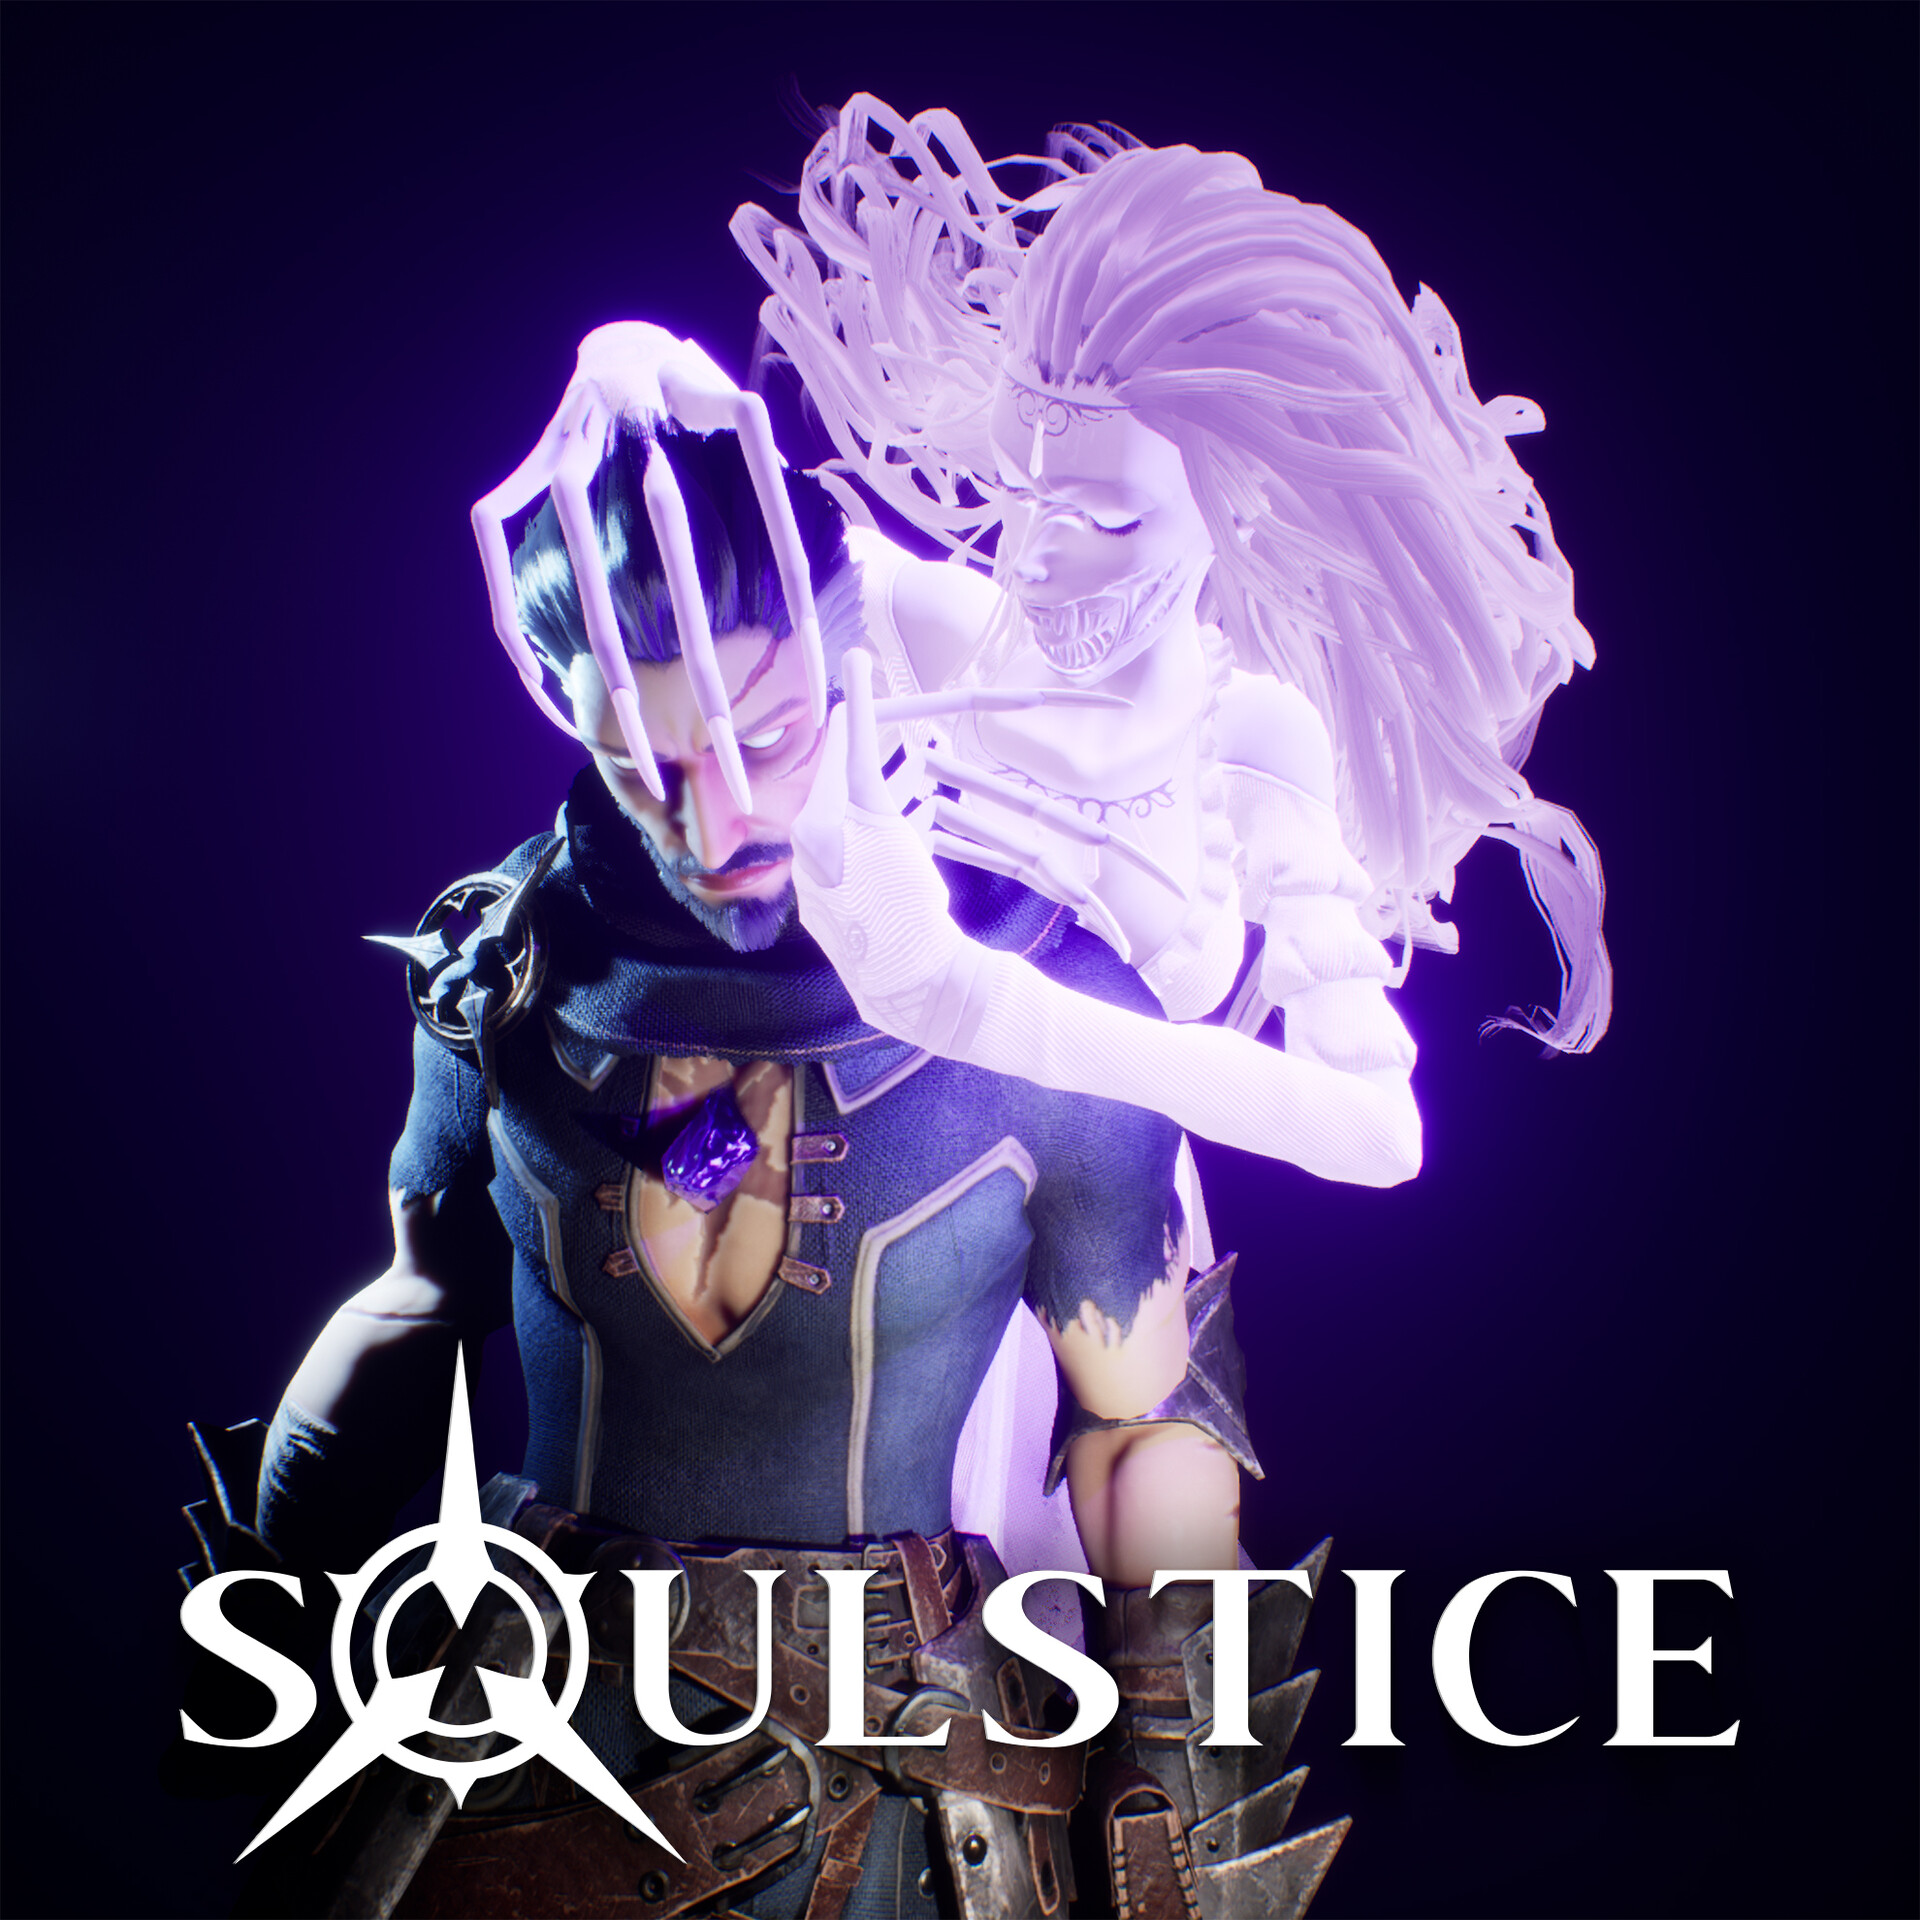 Soulstice Gameplay Trailer Showcases Sir Donovan's Skills